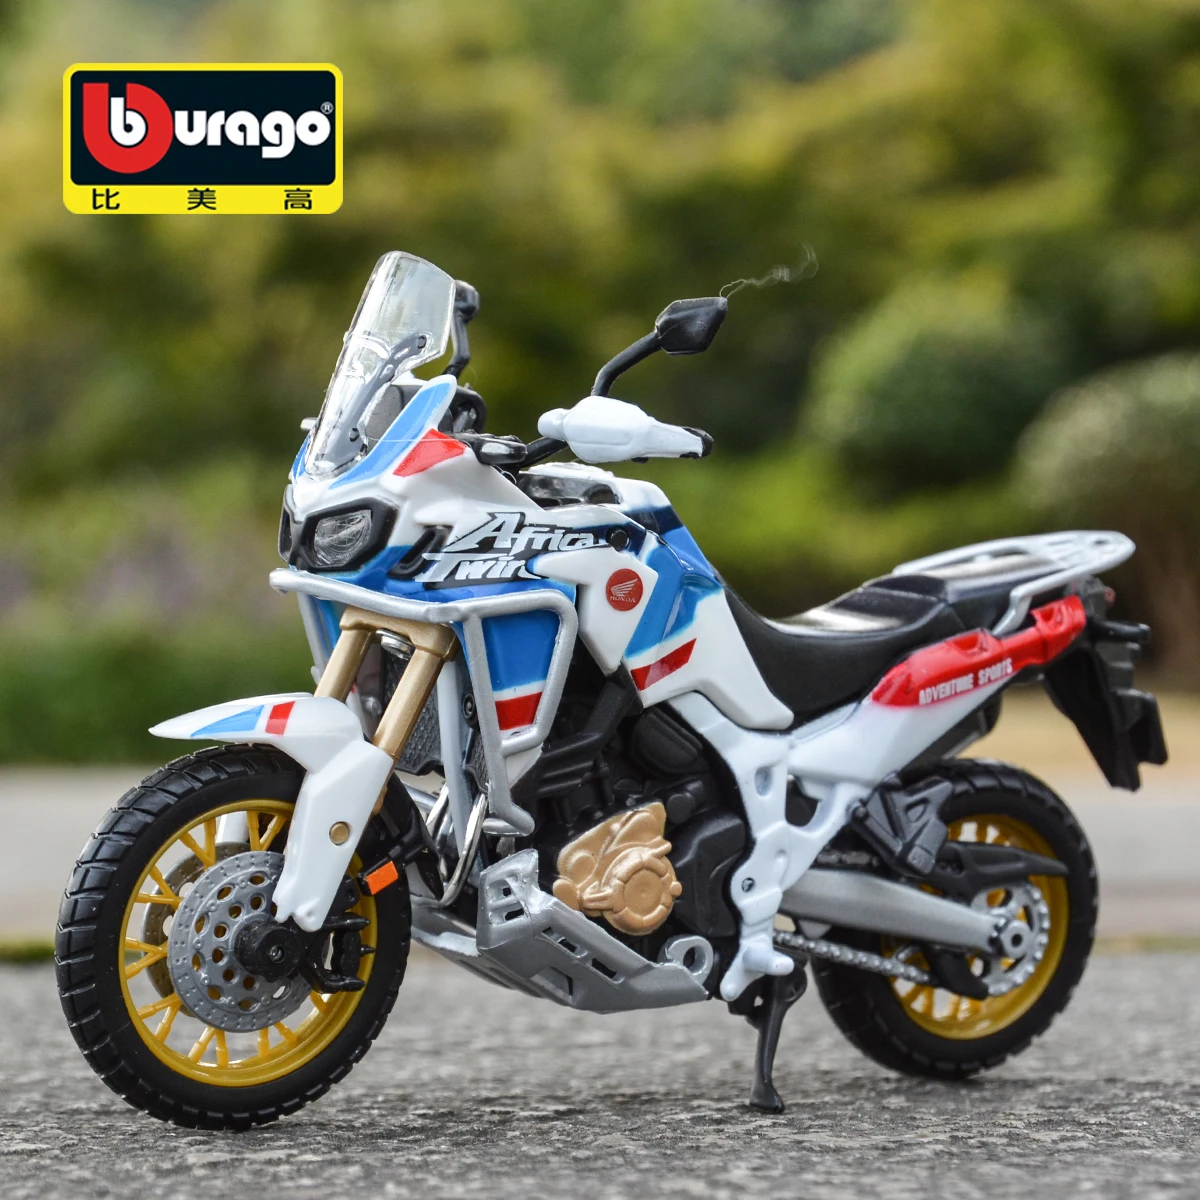 Bburago 1:18 Honda Africa Twin Adventure Static Die Cast Vehicles Collectible Hobbies Motorcycle Model Toys